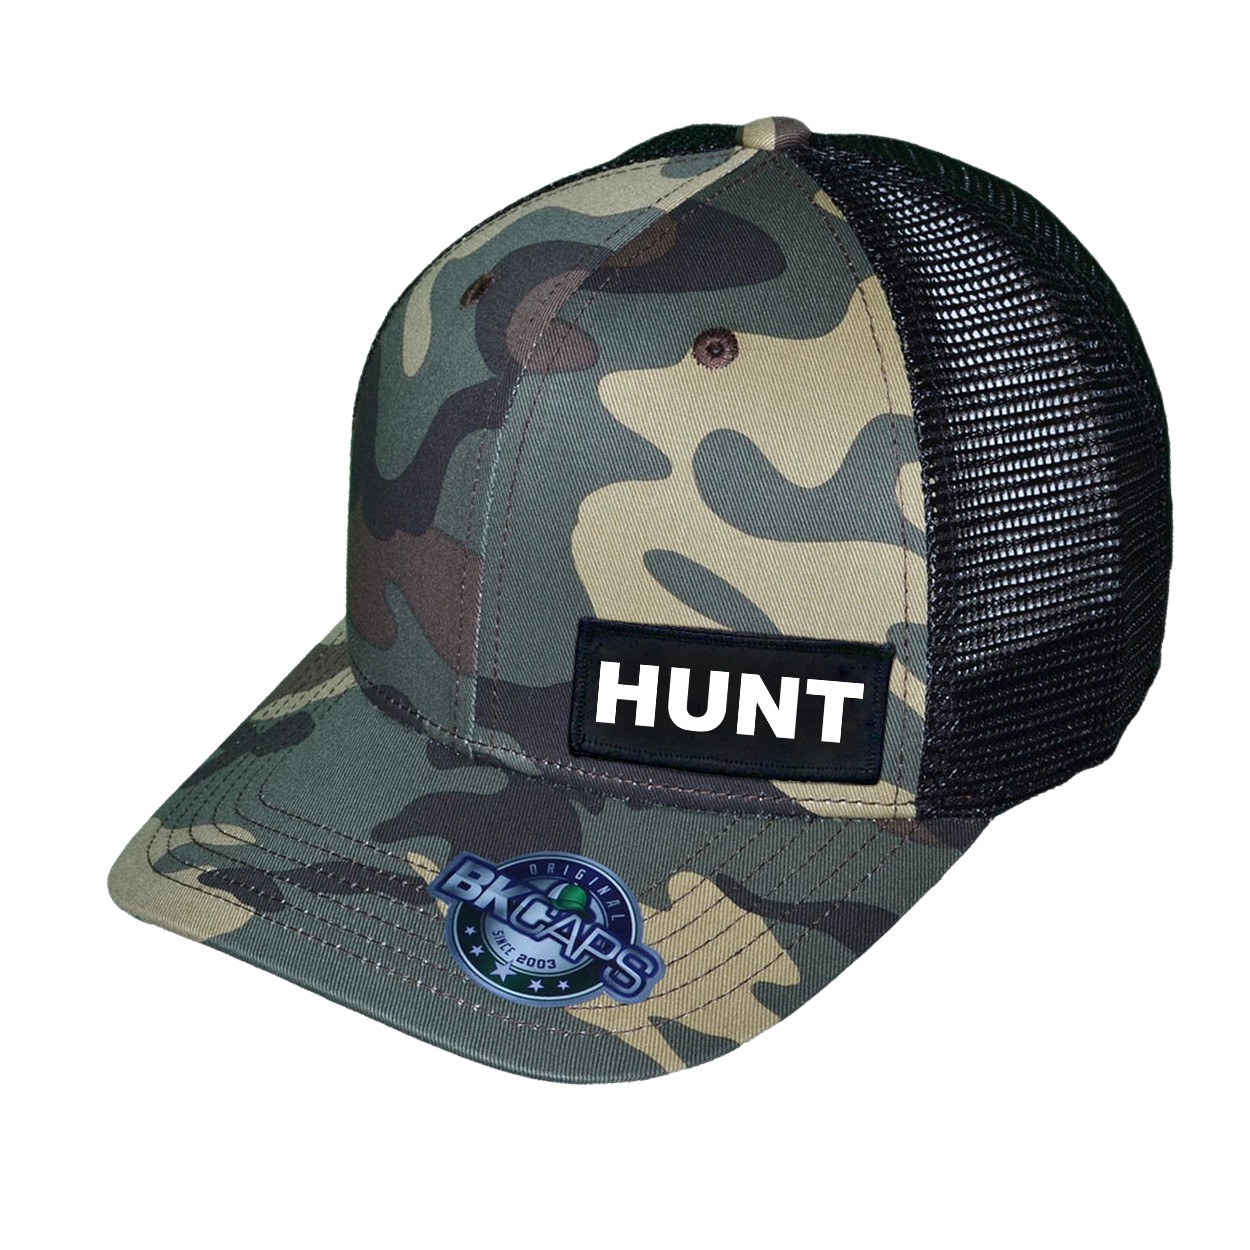 Hunt Brand Logo Night Out Woven Patch Snapback Trucker Hat Khaki/Camo (White Logo)